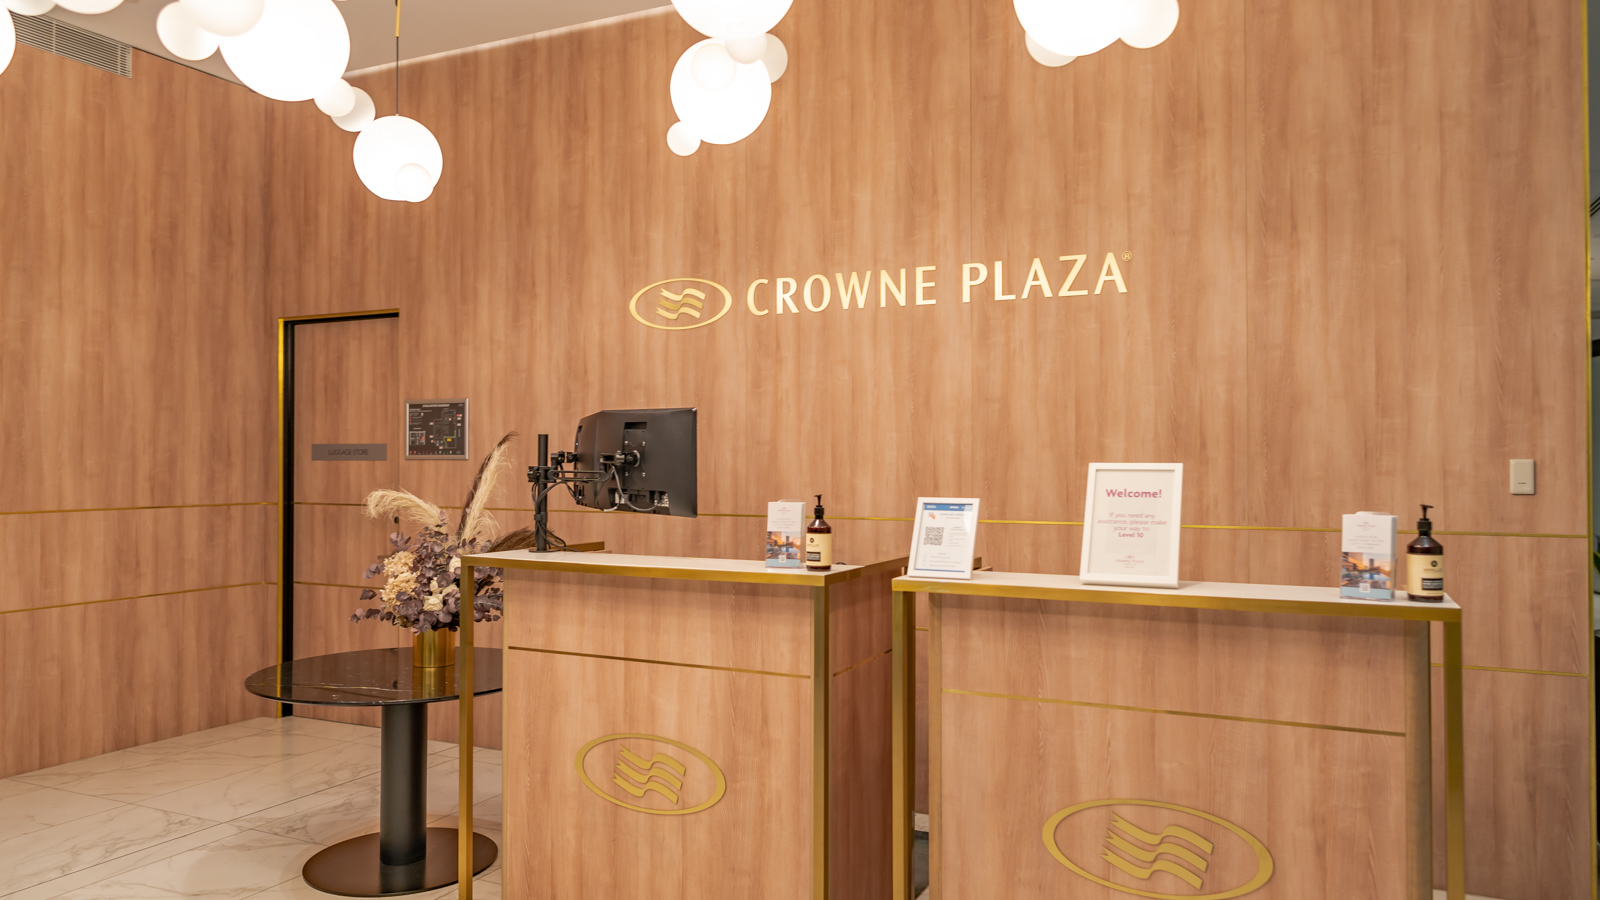 Crowne Plaza Adelaide ground floor reception